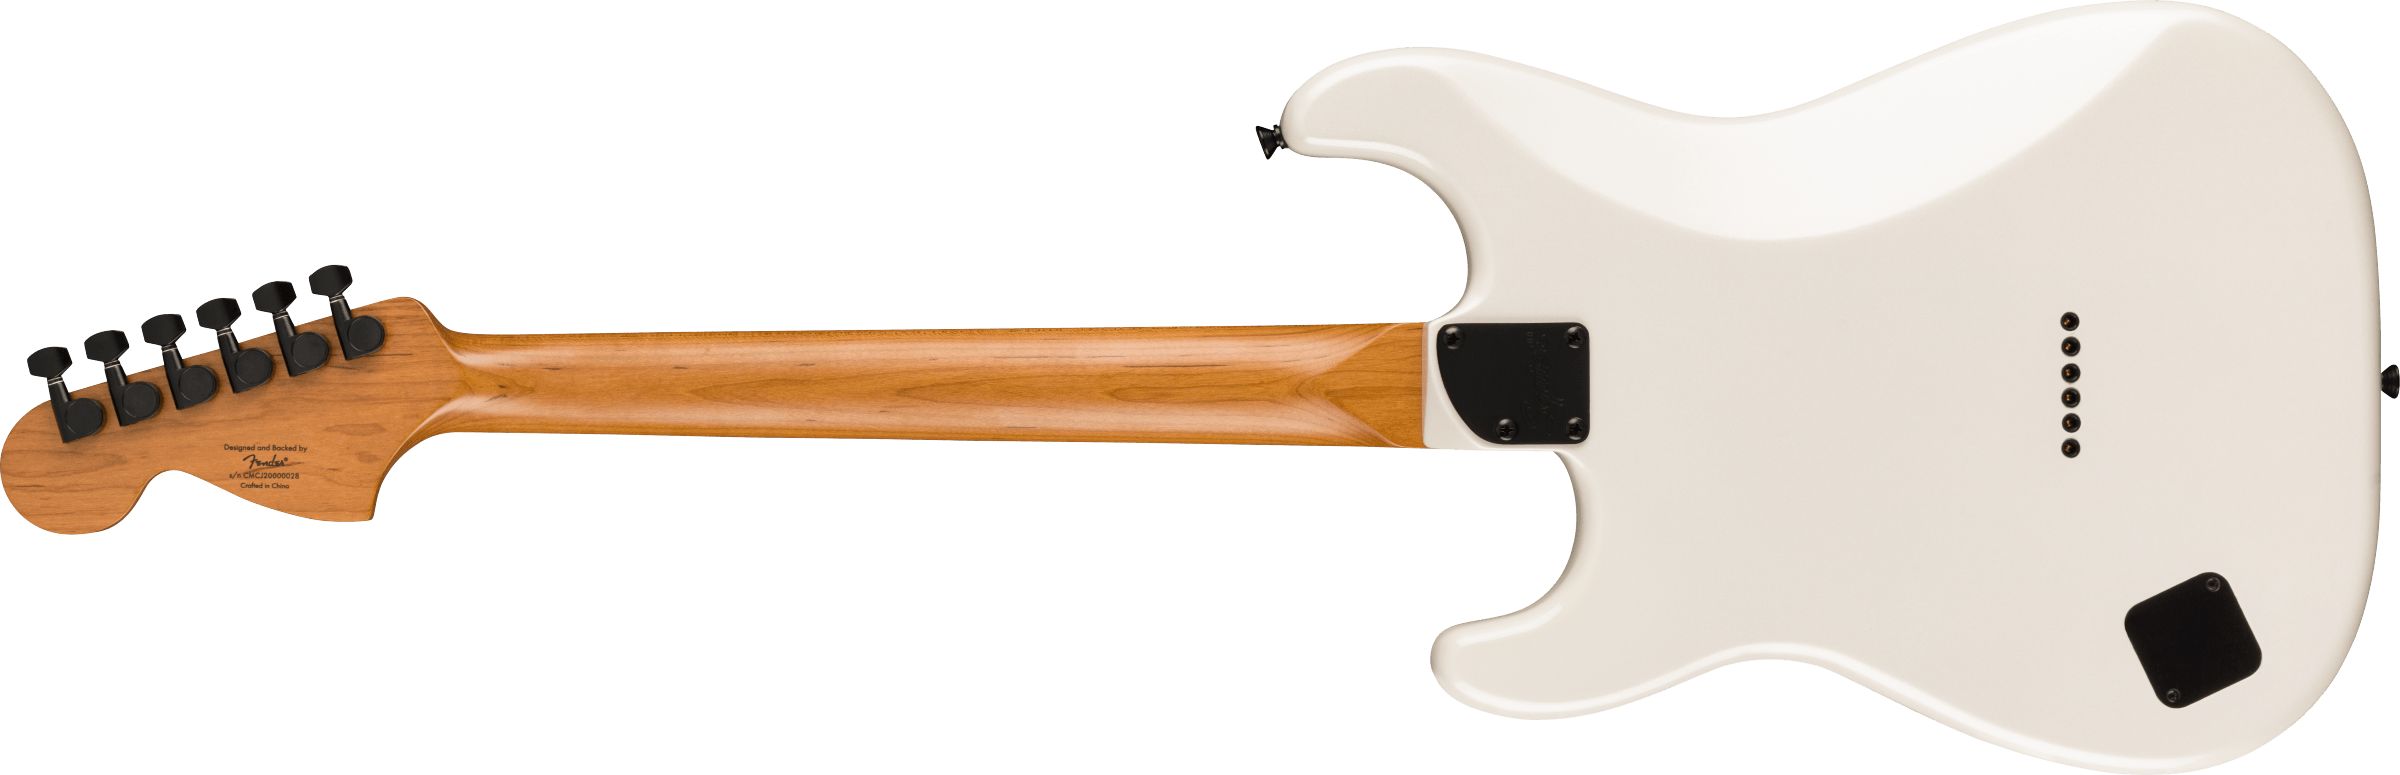 Squier Contemporary Stratocaster Special HT. Squier Contemporary Telecaster rh Pearl White. Фендер скваер, Контемпорари телекастер. Squier Contemp tele белый.